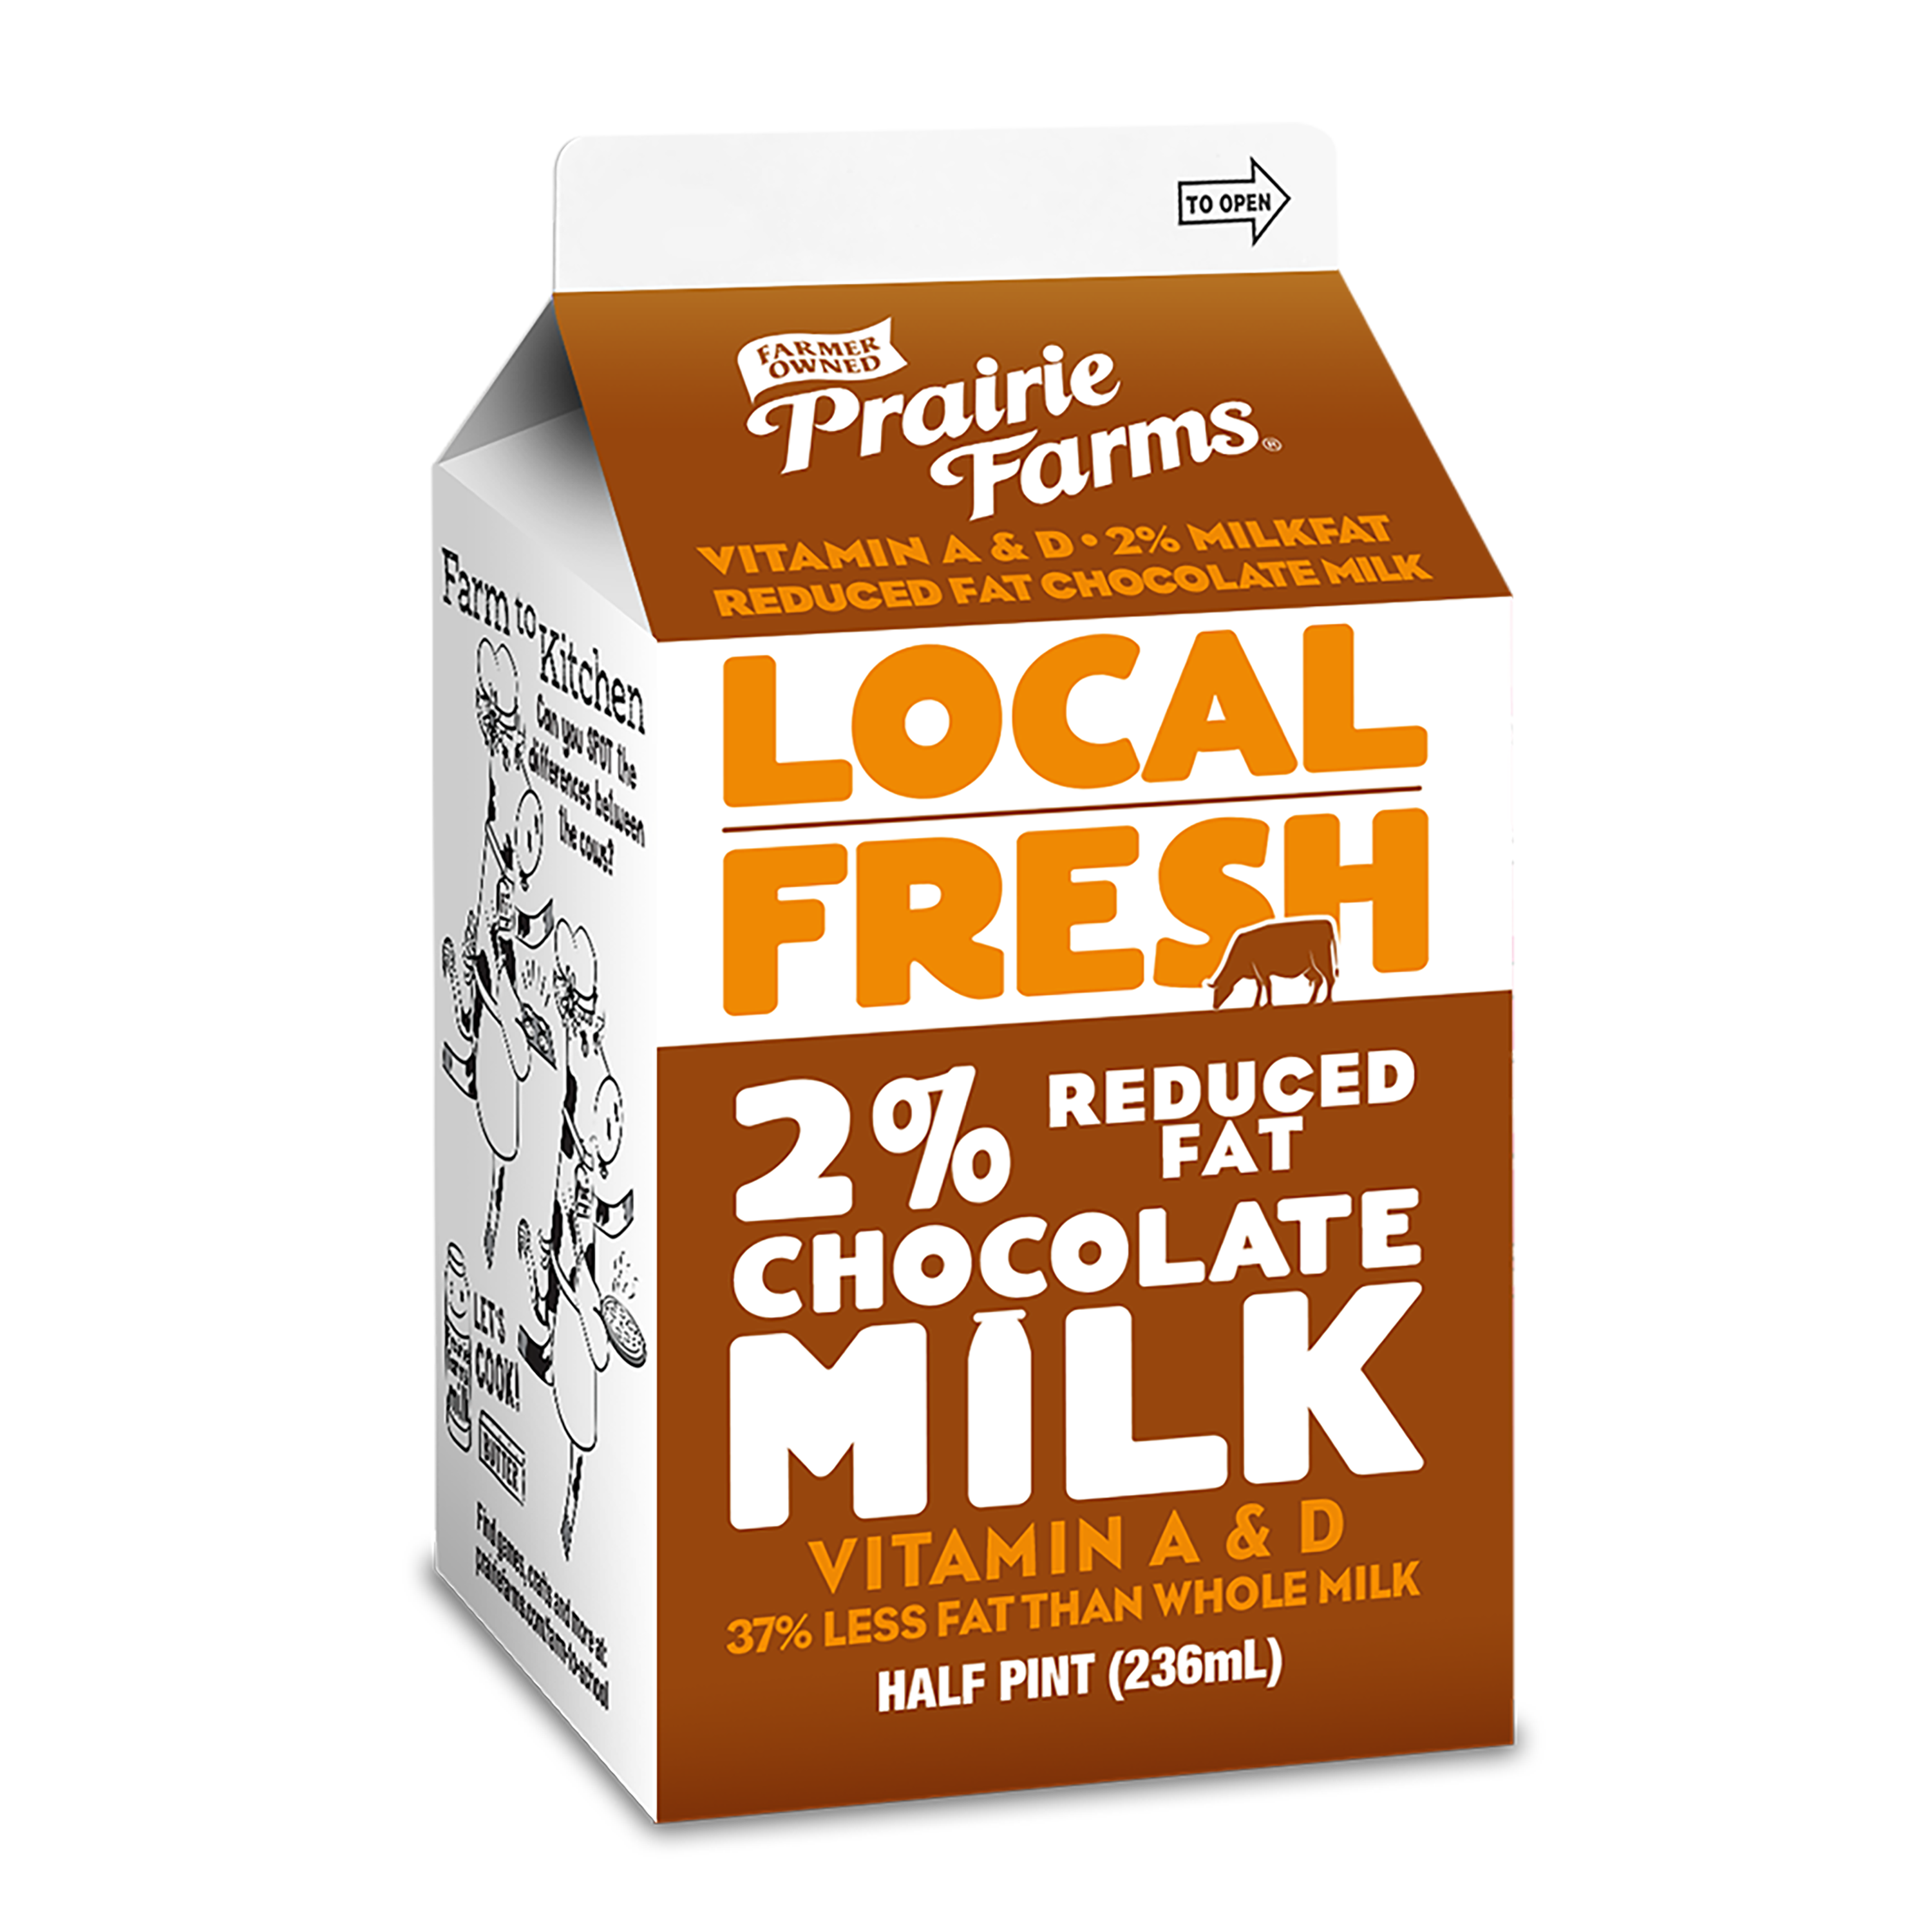 school chocolate milk carton